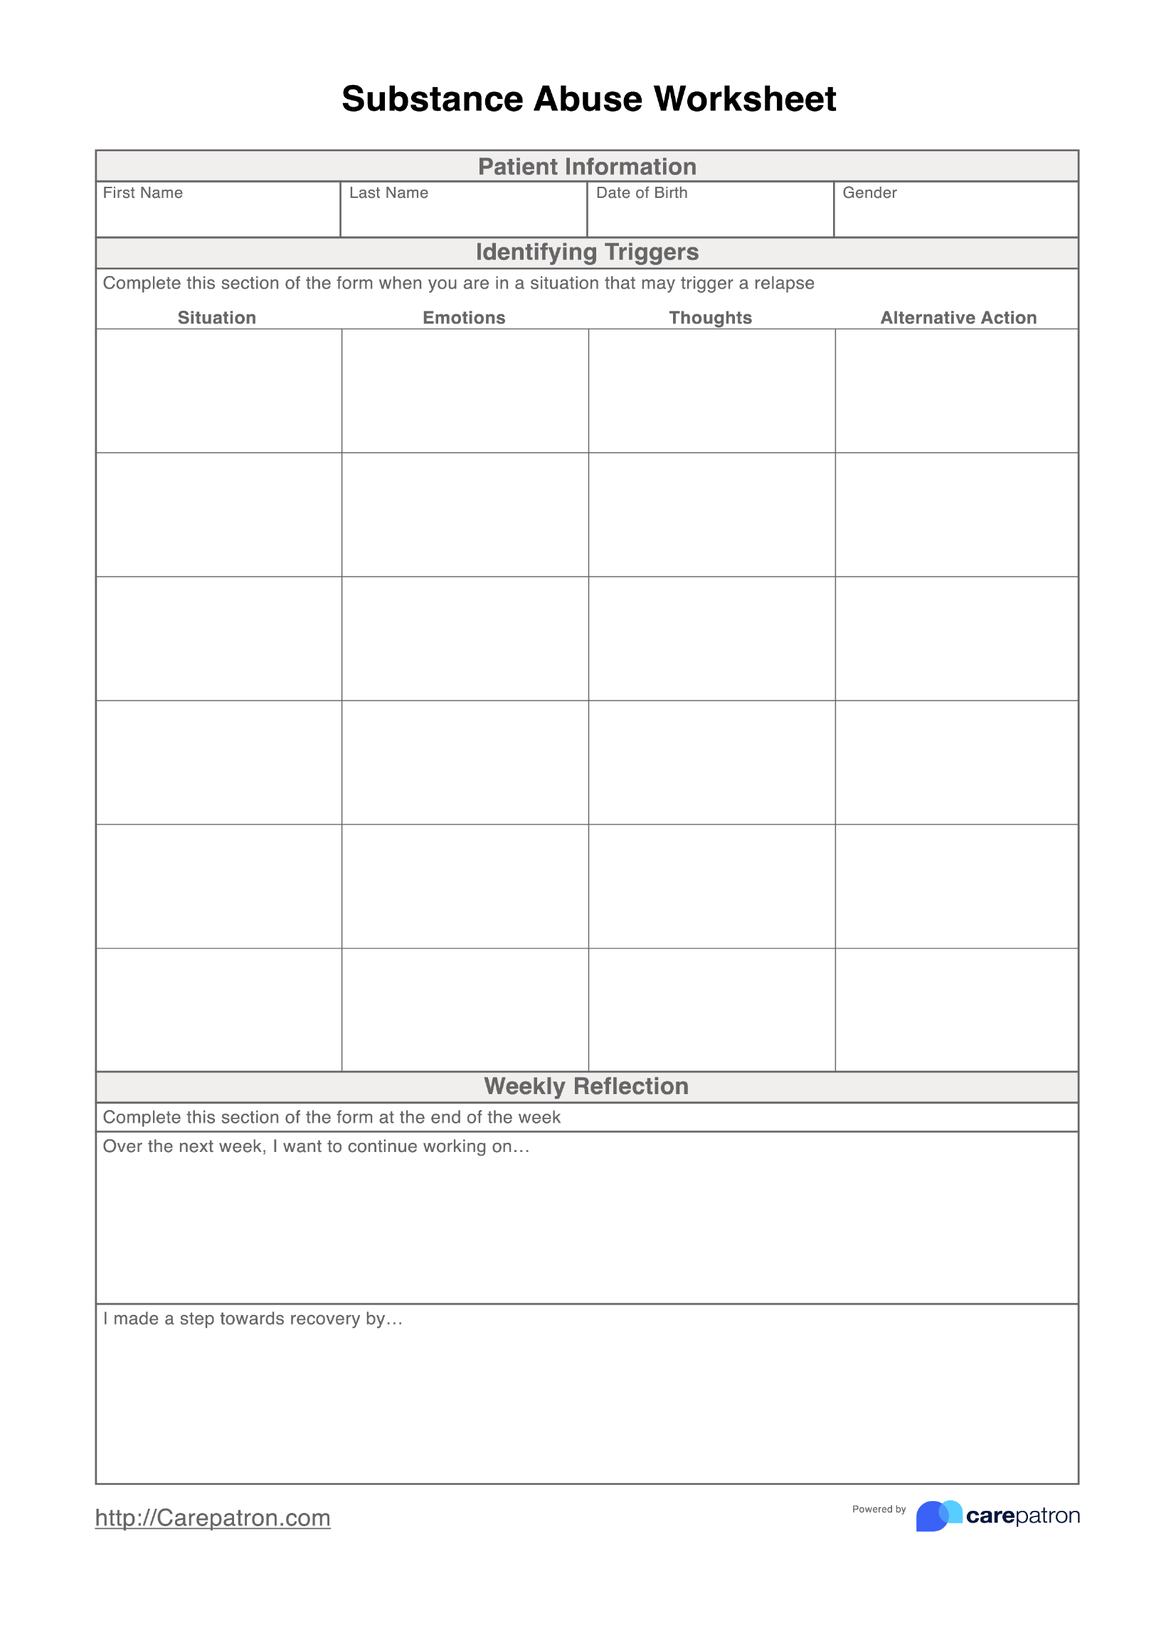 Substance Abuse Worksheet PDF Example